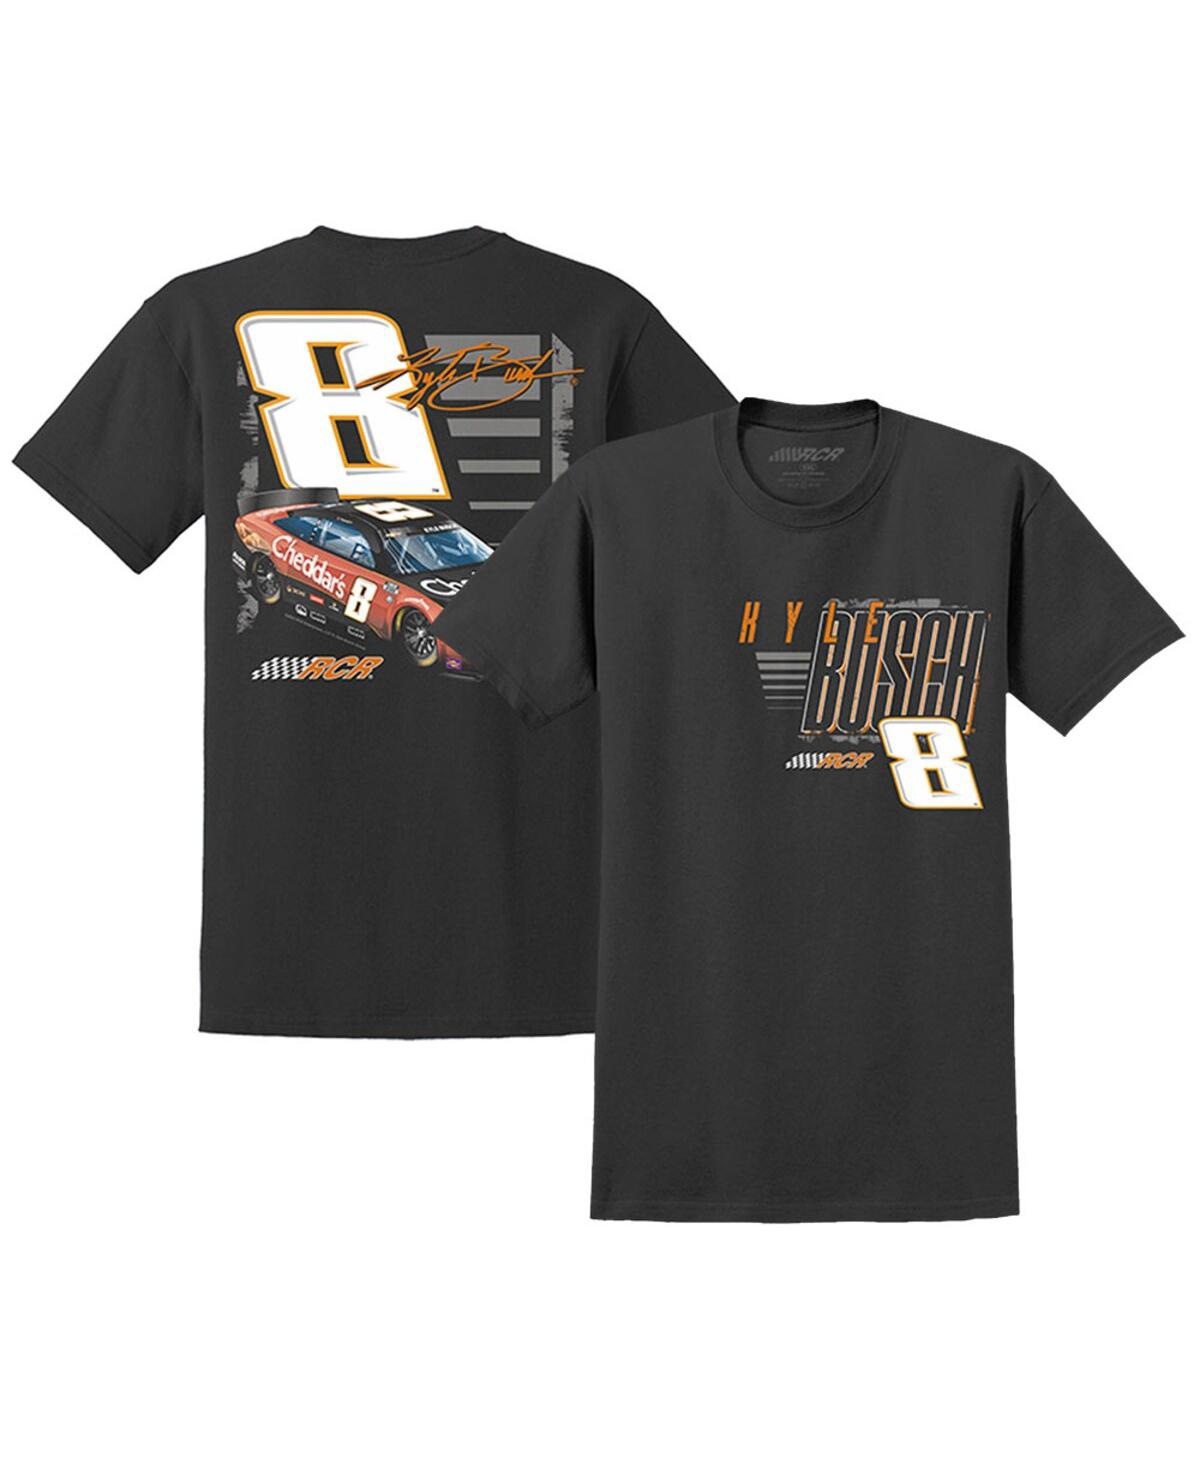 Men's Richard Childress Racing Team Collection Black Kyle Busch Car T-shirt - Black